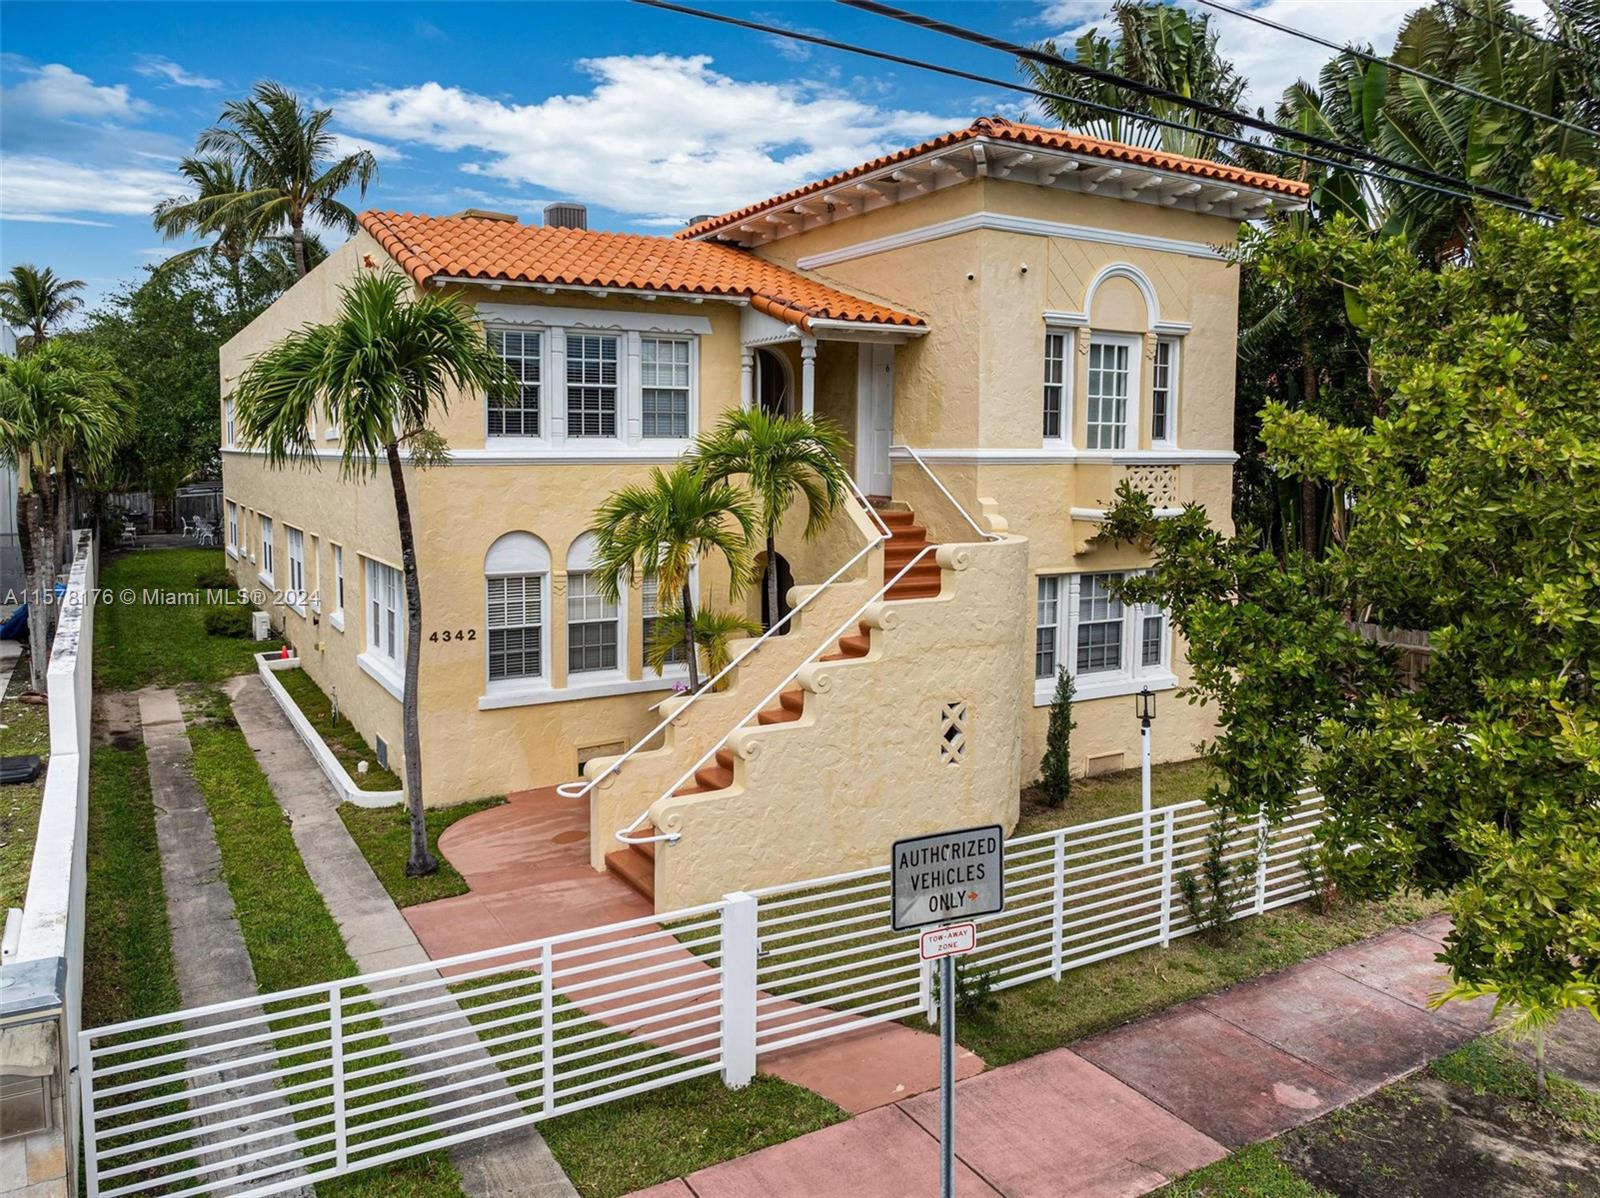 Rental Property at 4342 Sheridan Ave 8, Miami Beach, Miami-Dade County, Florida - Bedrooms: 1 
Bathrooms: 1  - $2,300 MO.